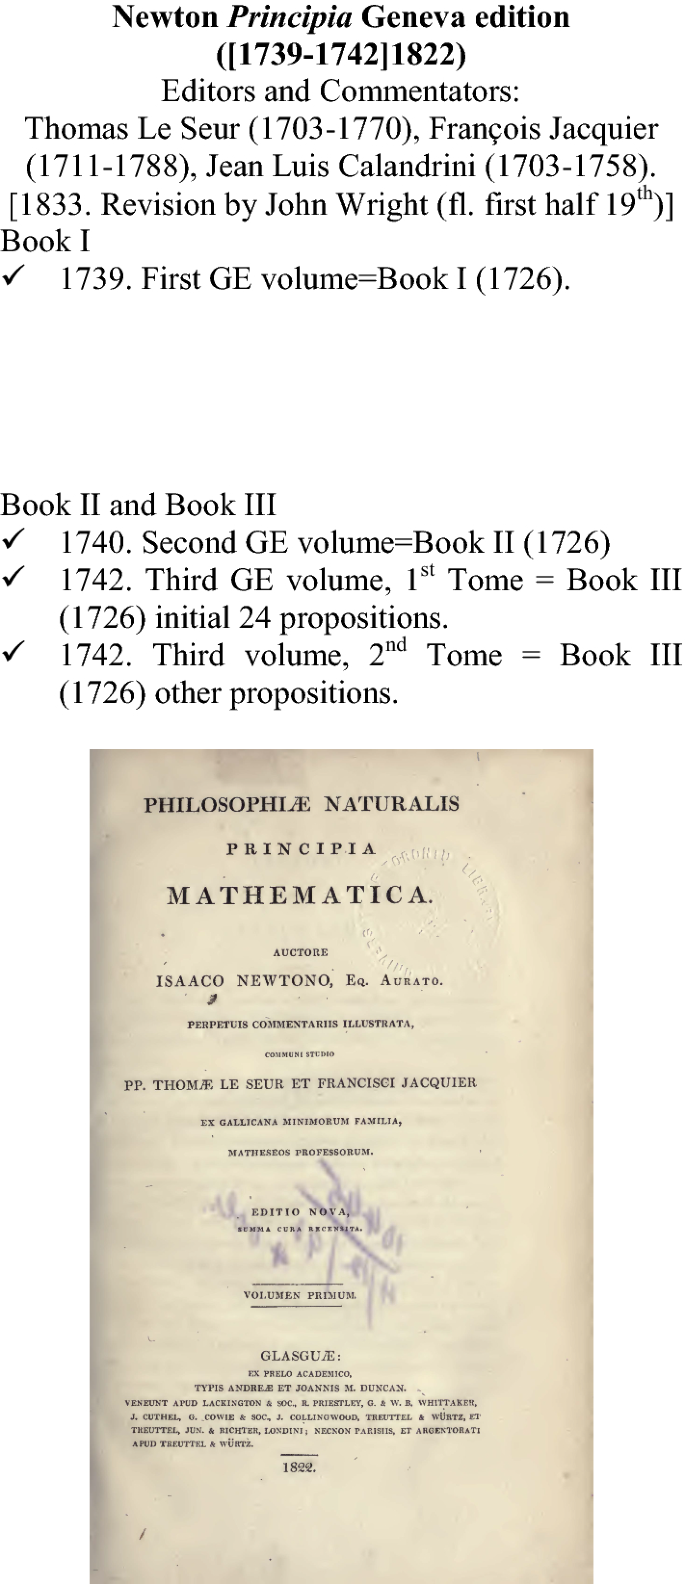 Conceptual Frameworks On The Relationship Between Physics Mathematics In The Newton Principia Geneva Edition 12 Springerlink